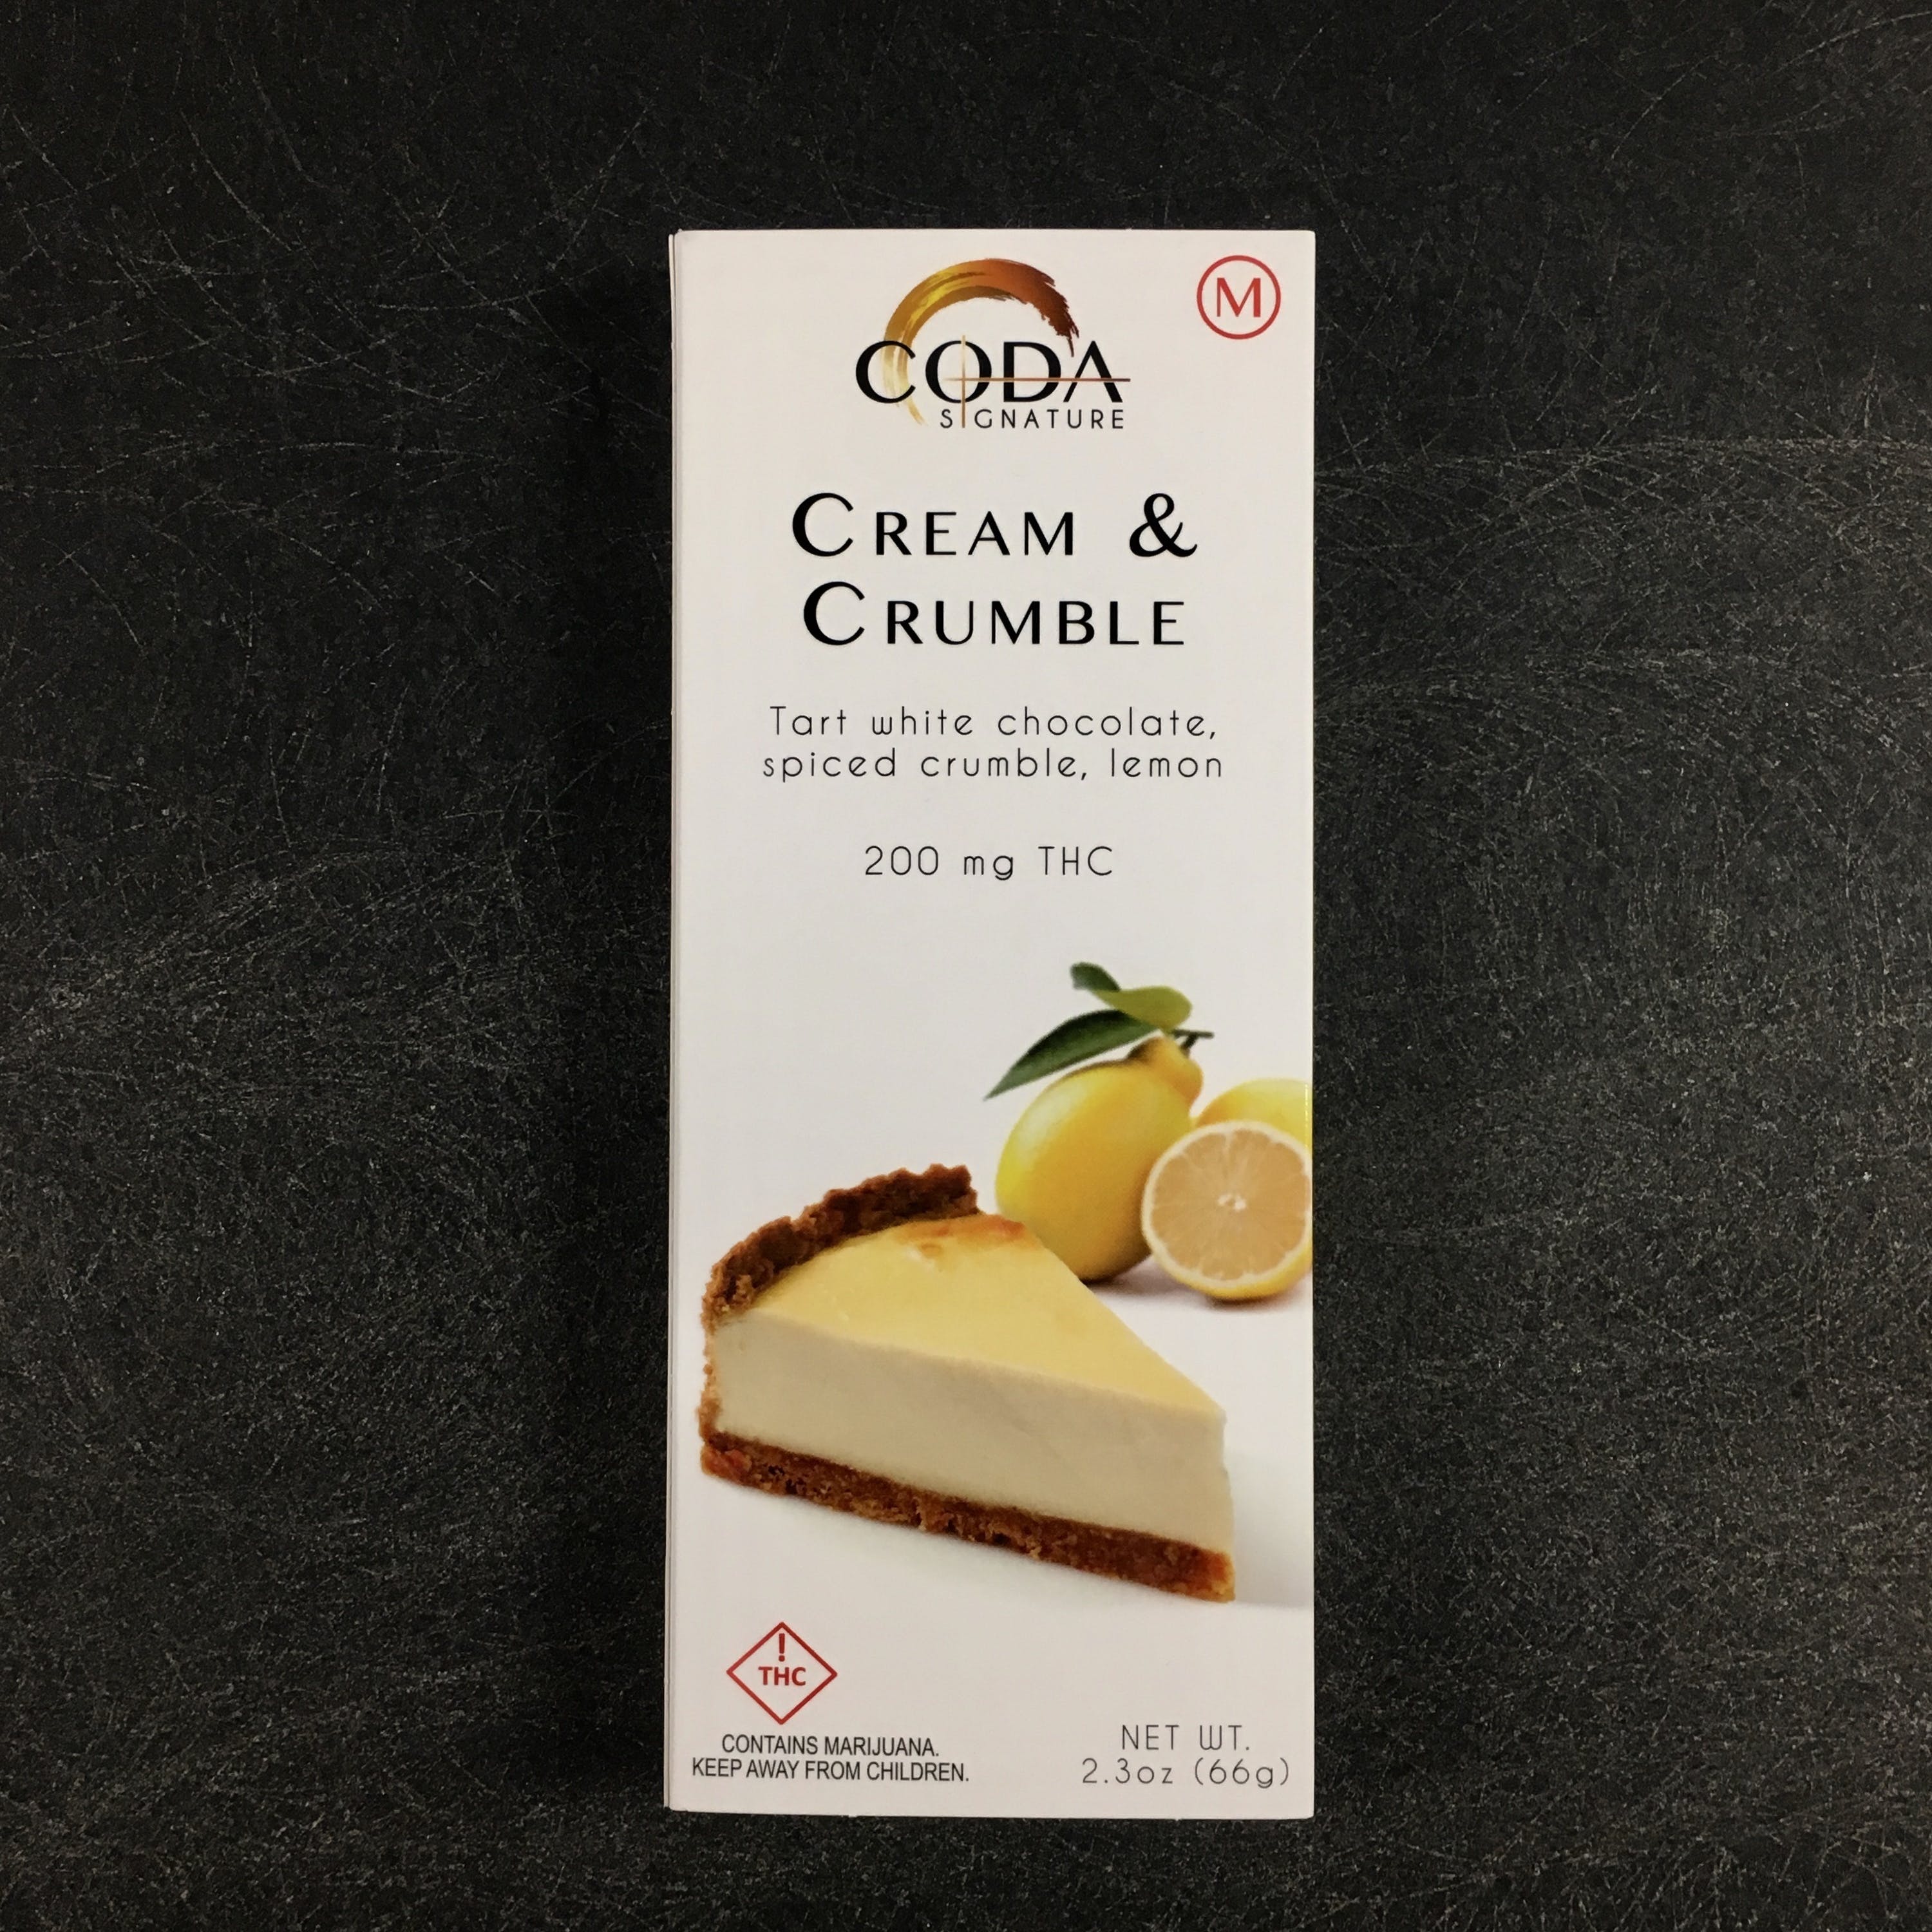 edible-coda-signature-2c-cream-a-crumble-chocolate-2c-200mg